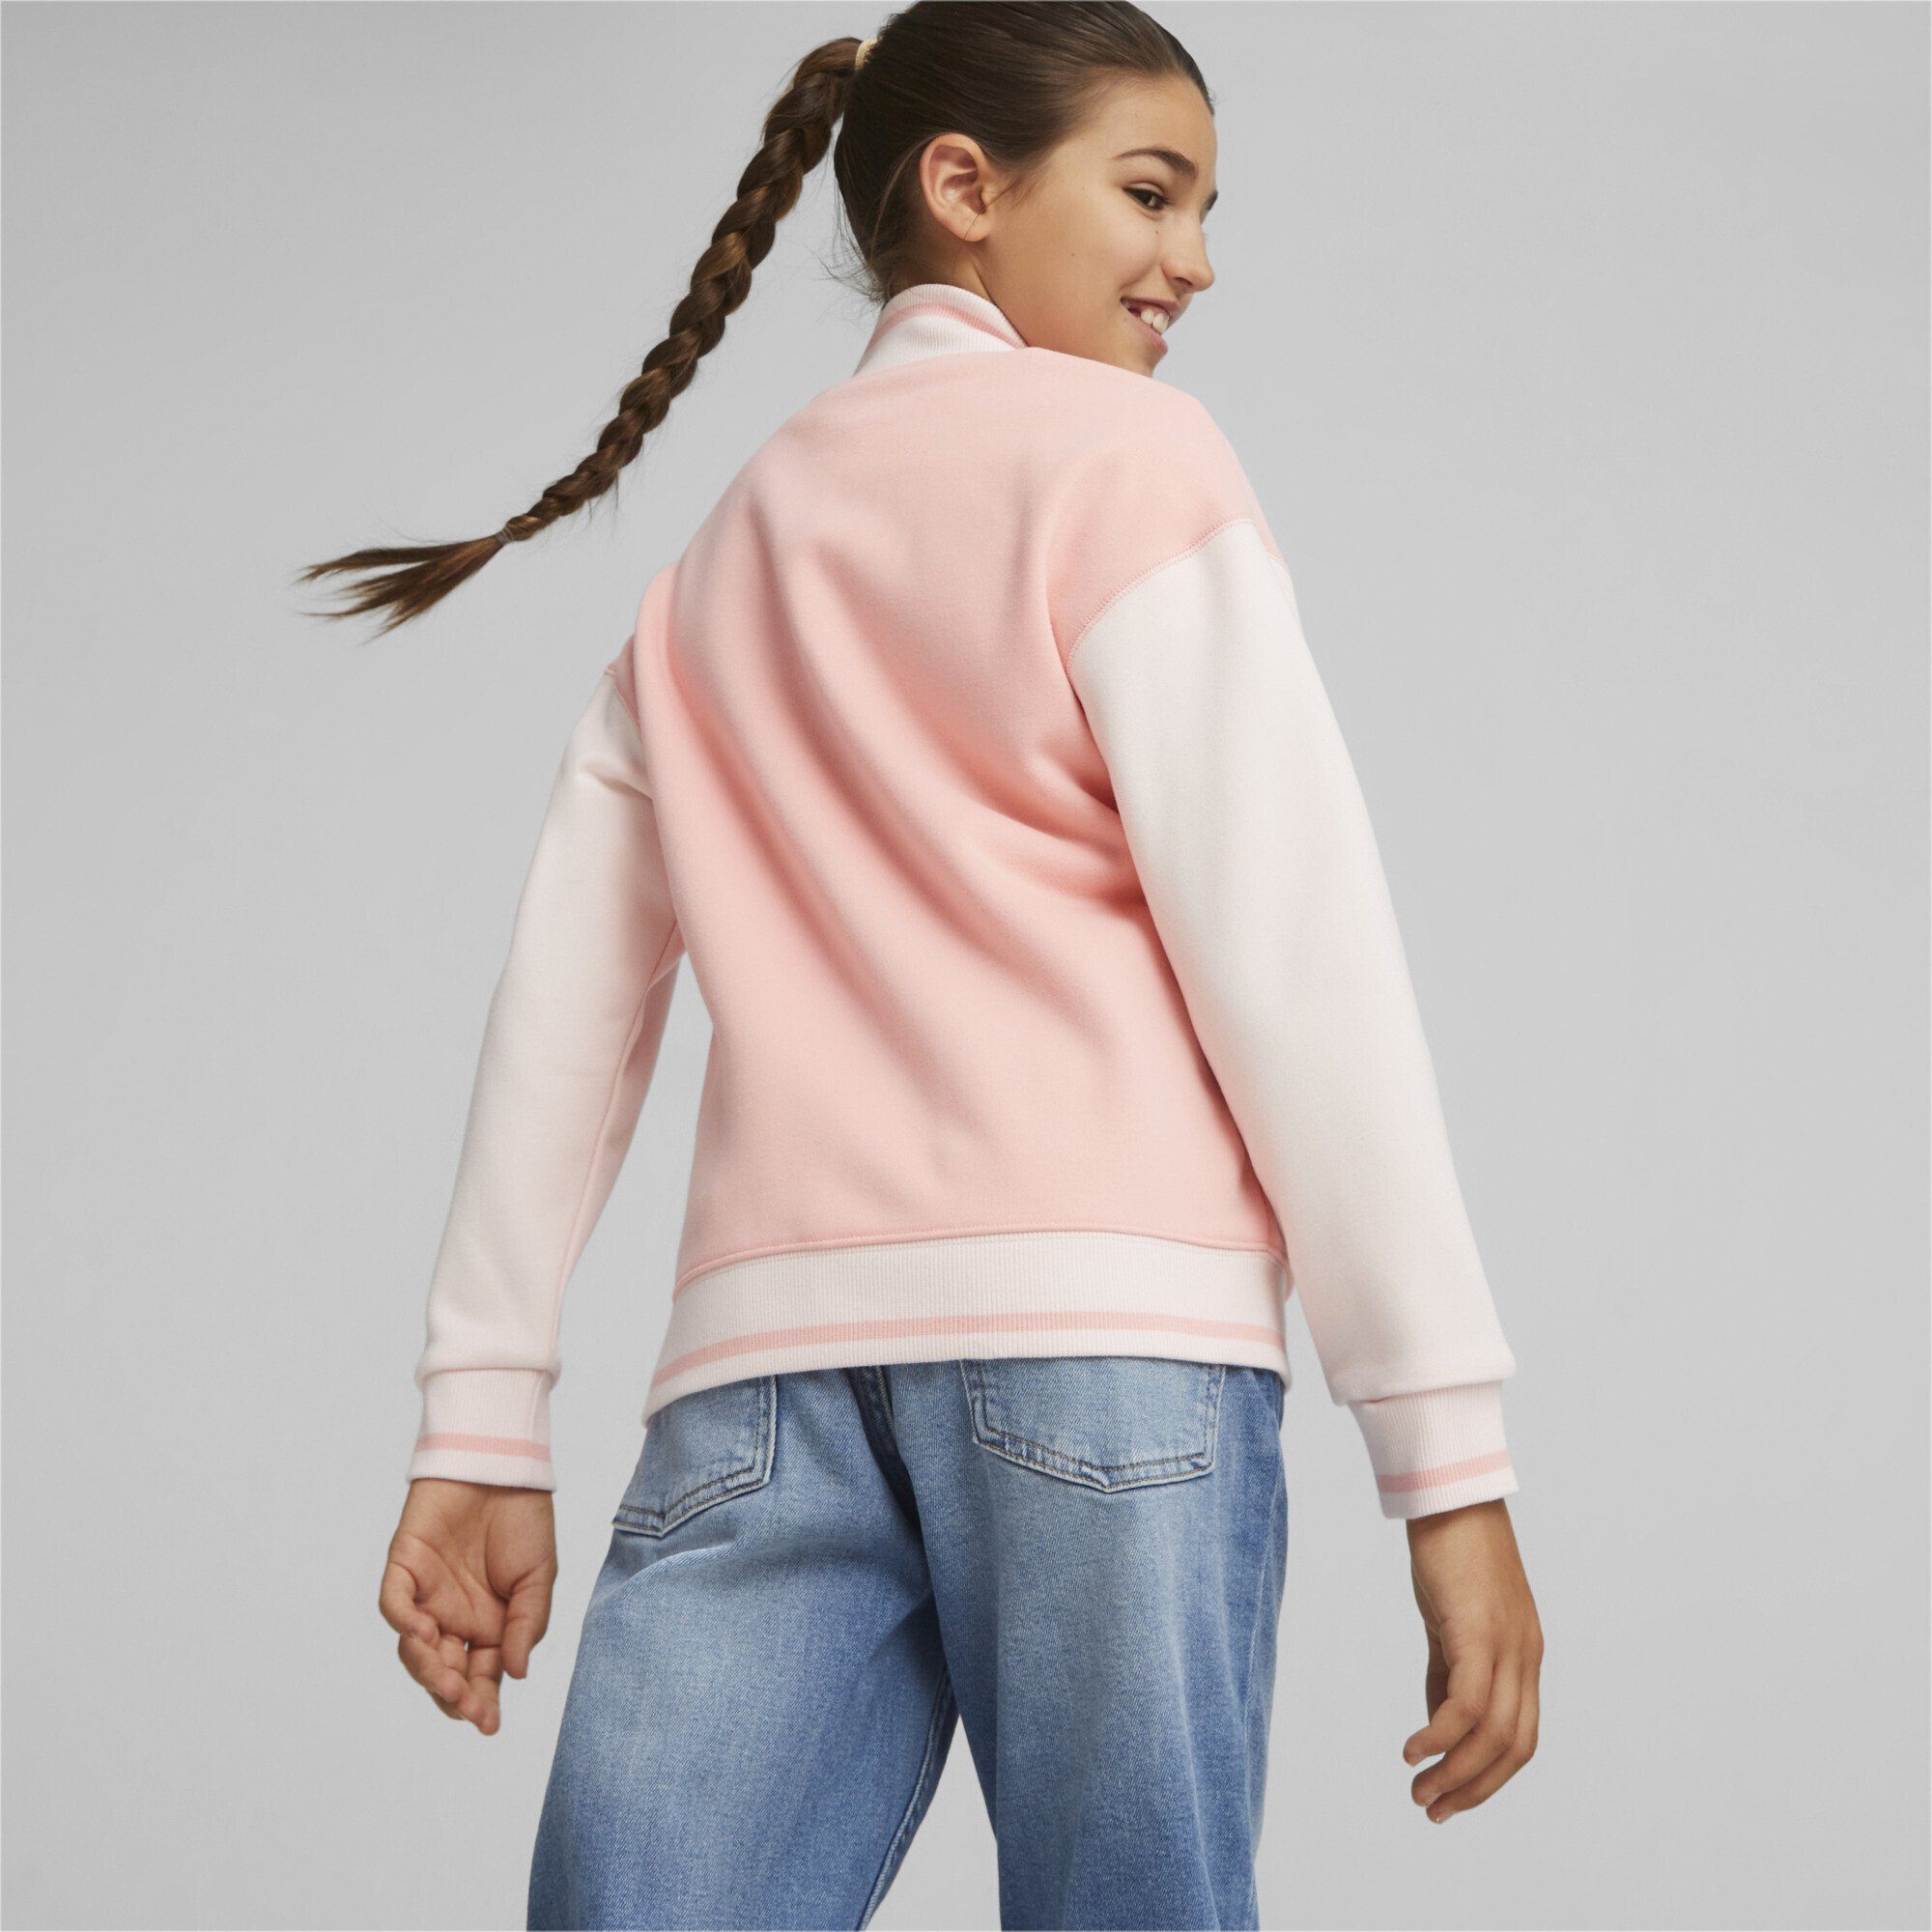 Jacke Classics Sweatshirt Mädchen Weather PUMA Sweater